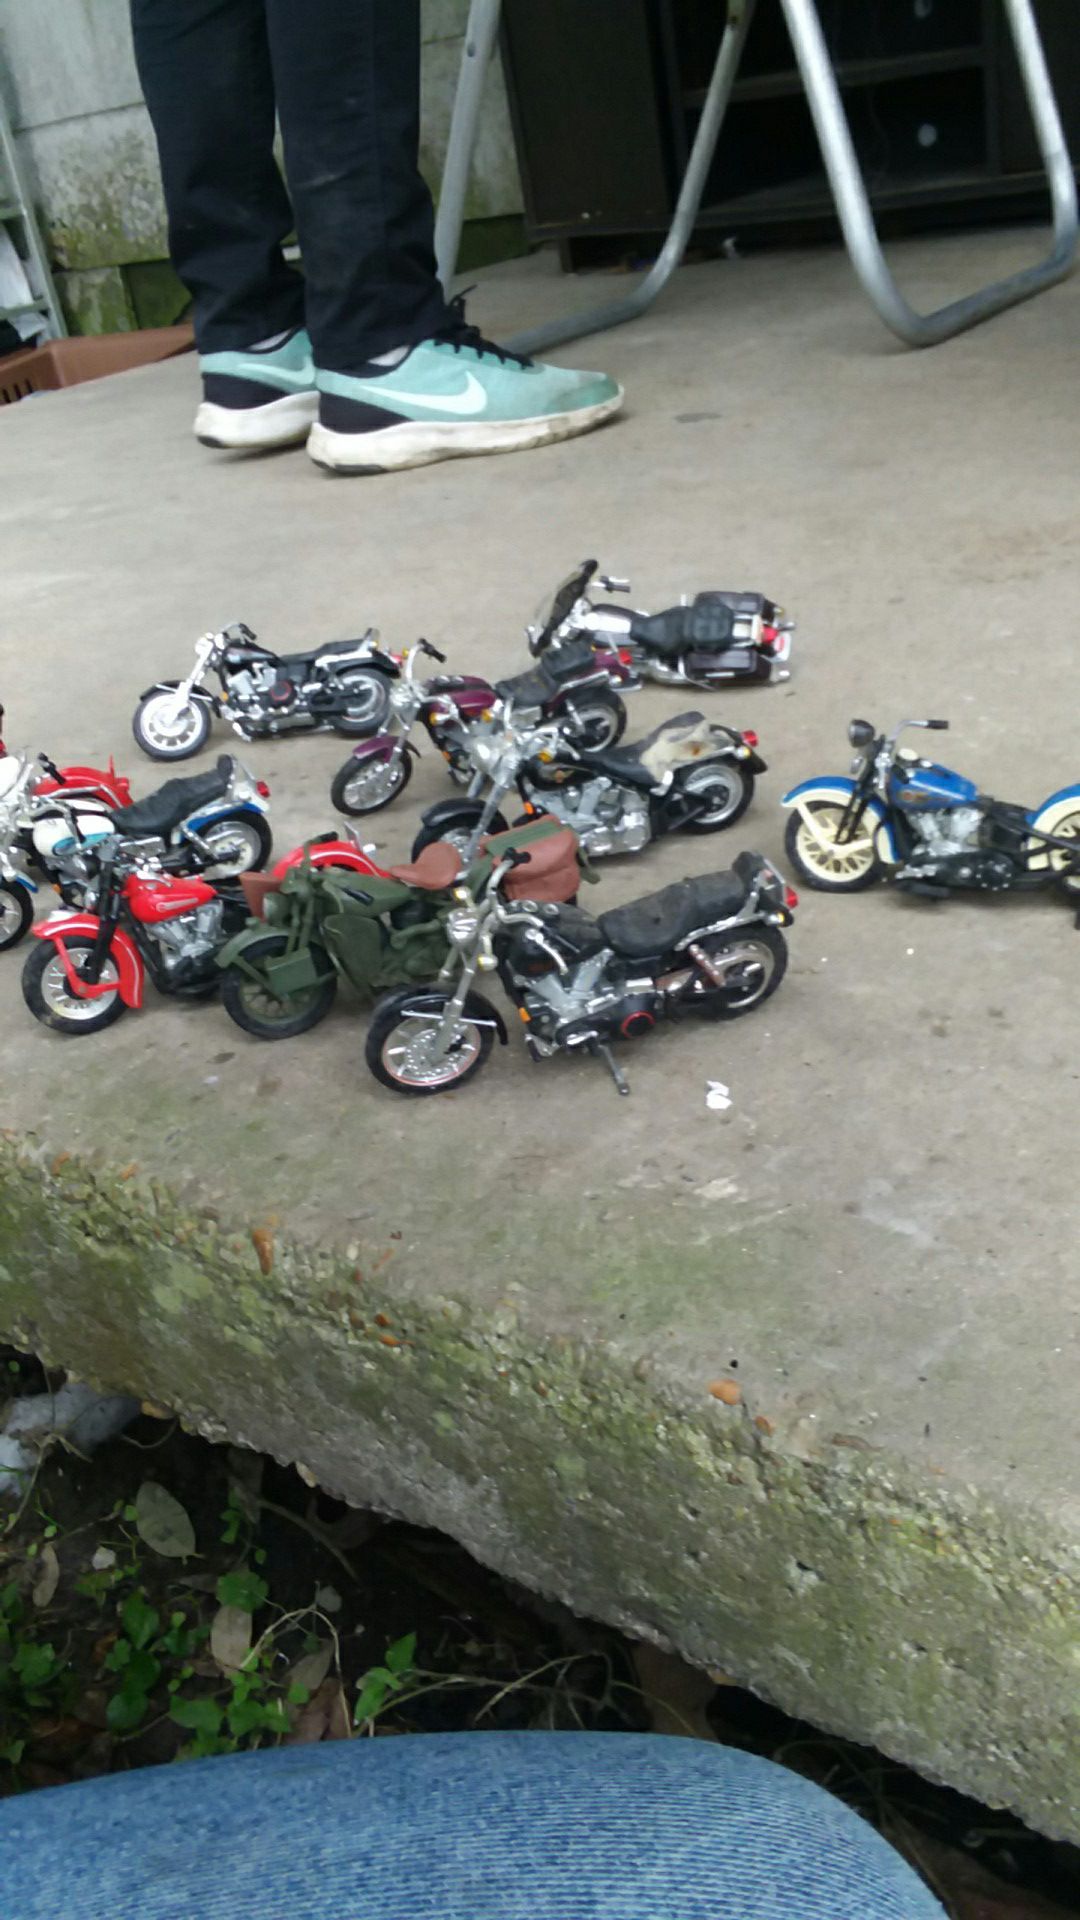 Collectible Harley-Davidson motorcycles